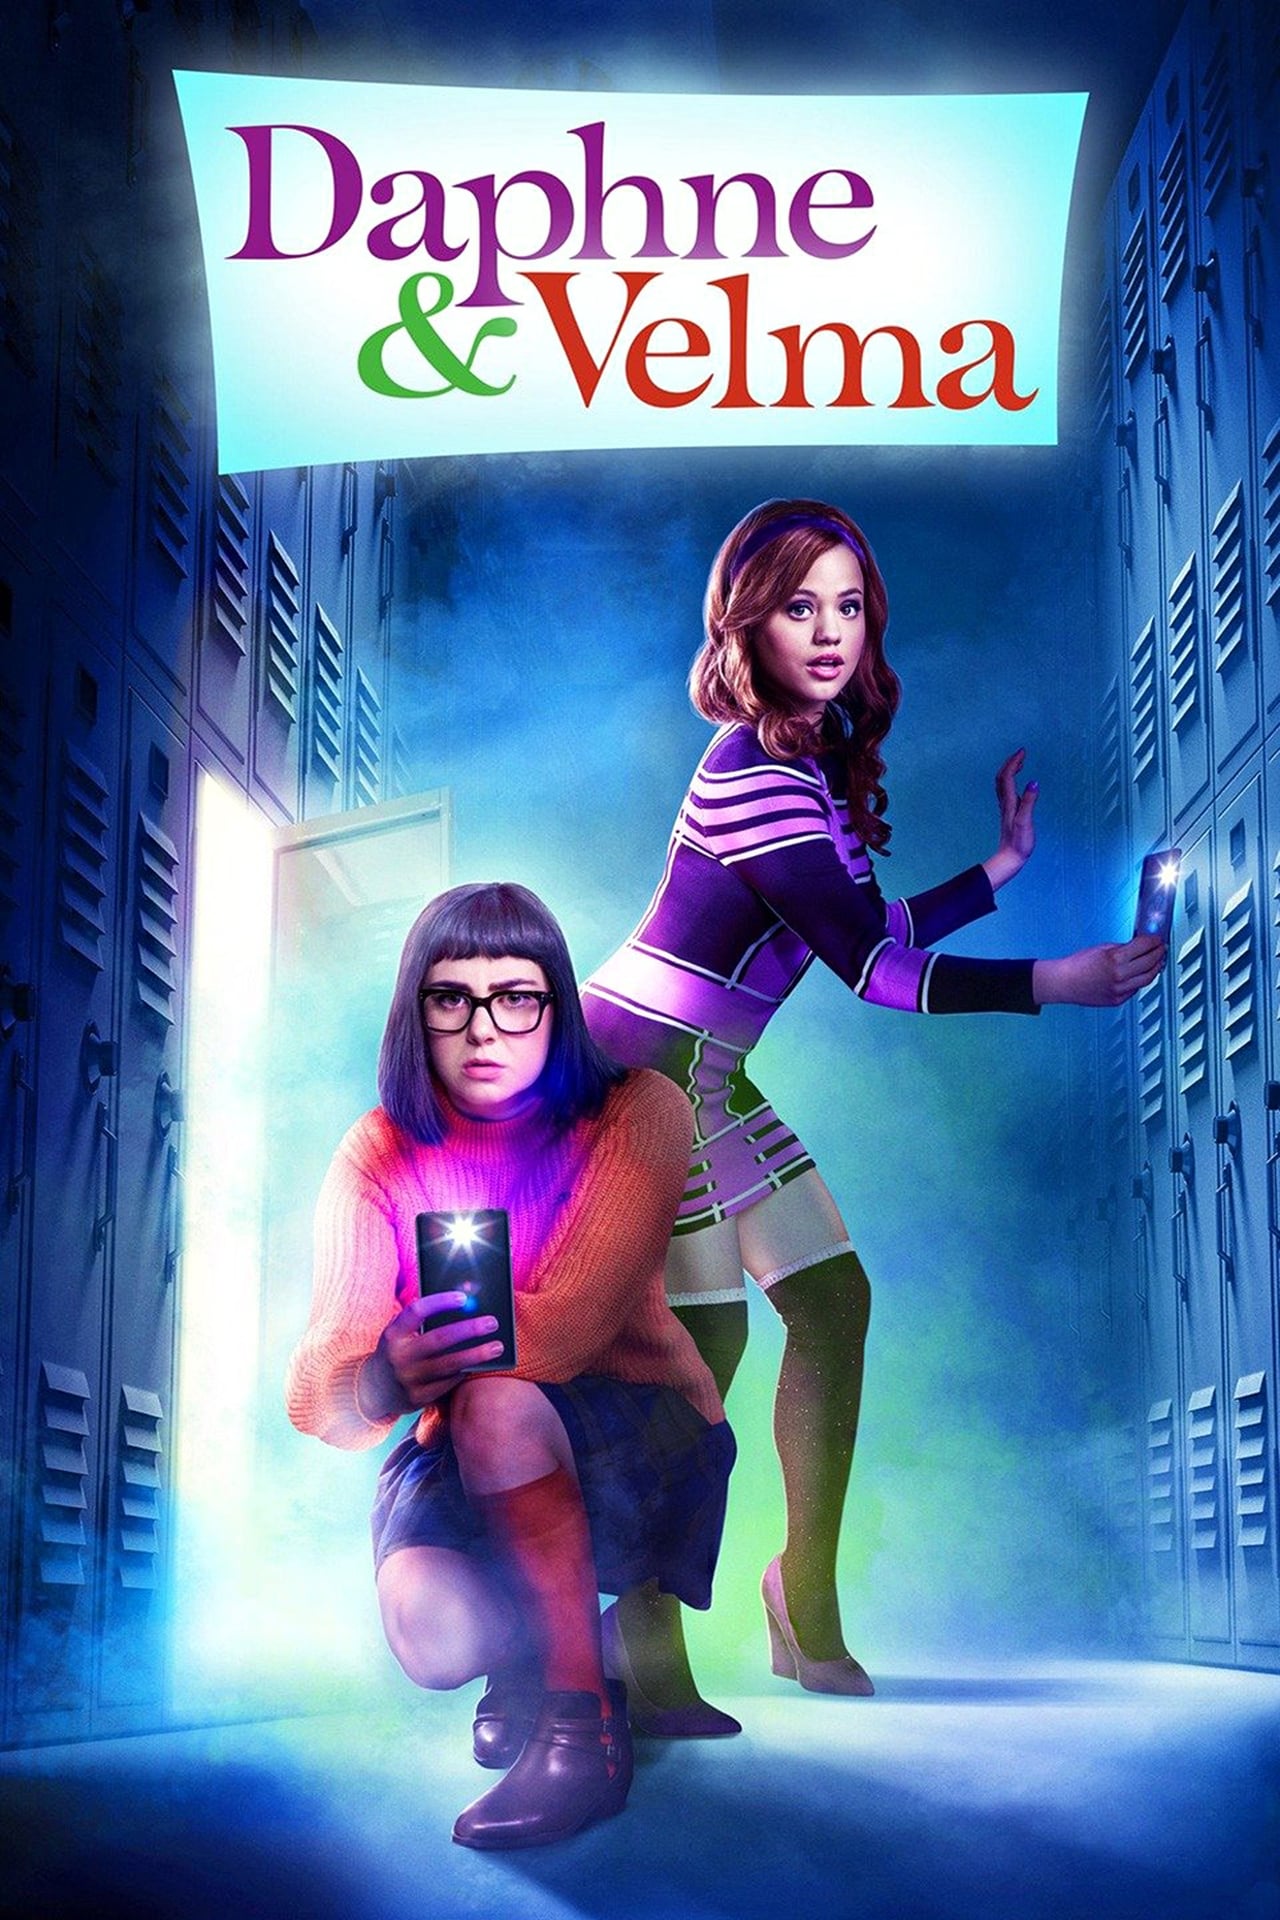 Ver Daphne & Velma (2018) Online - CUEVANA 3